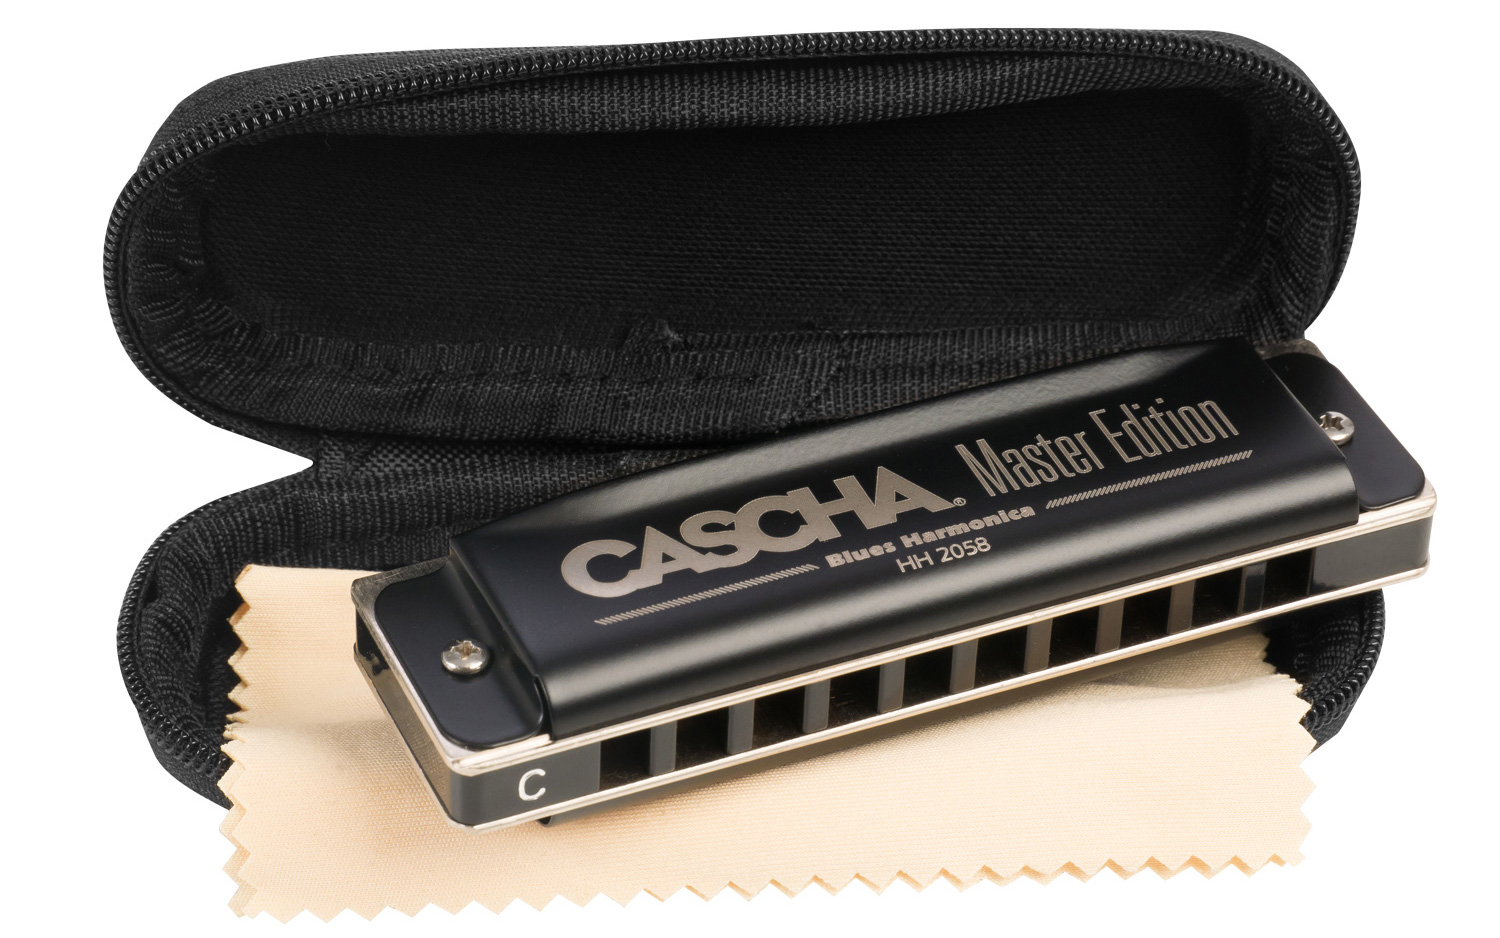 Cascha Master Edition Bluesharp in C